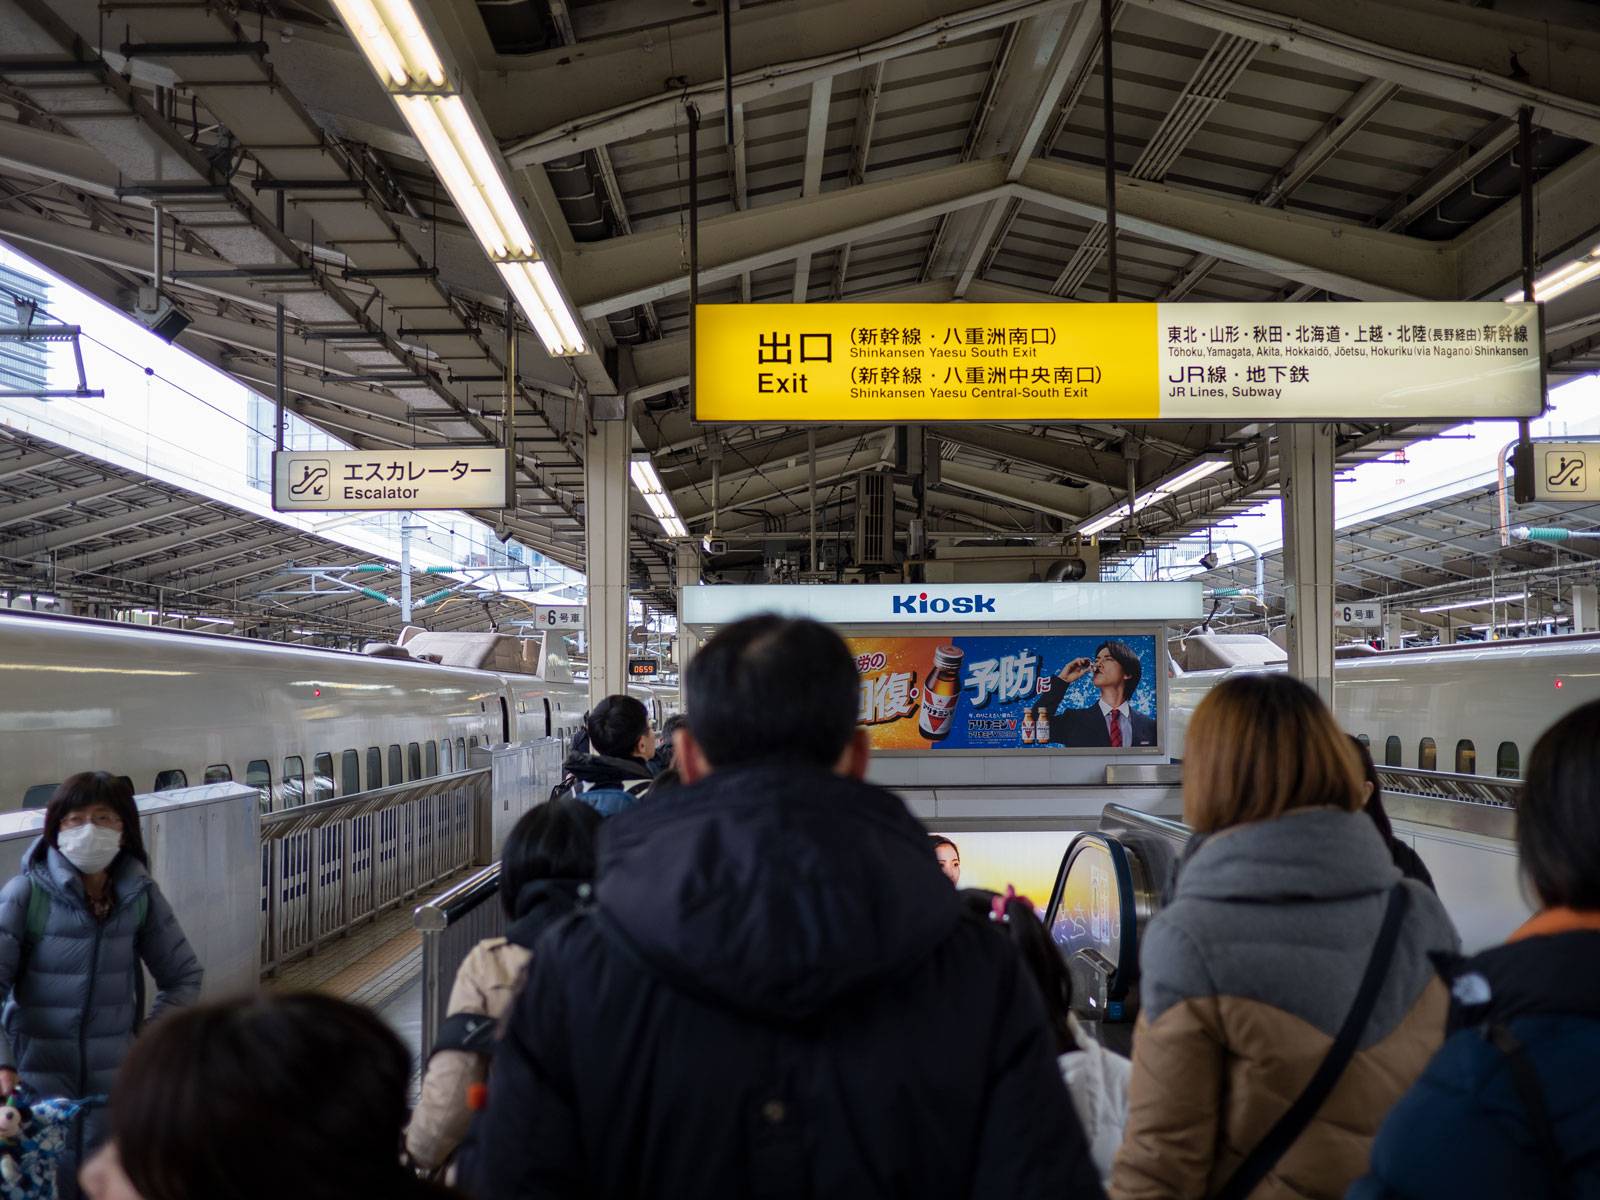 Departing the Shinkansen Tokyo platform